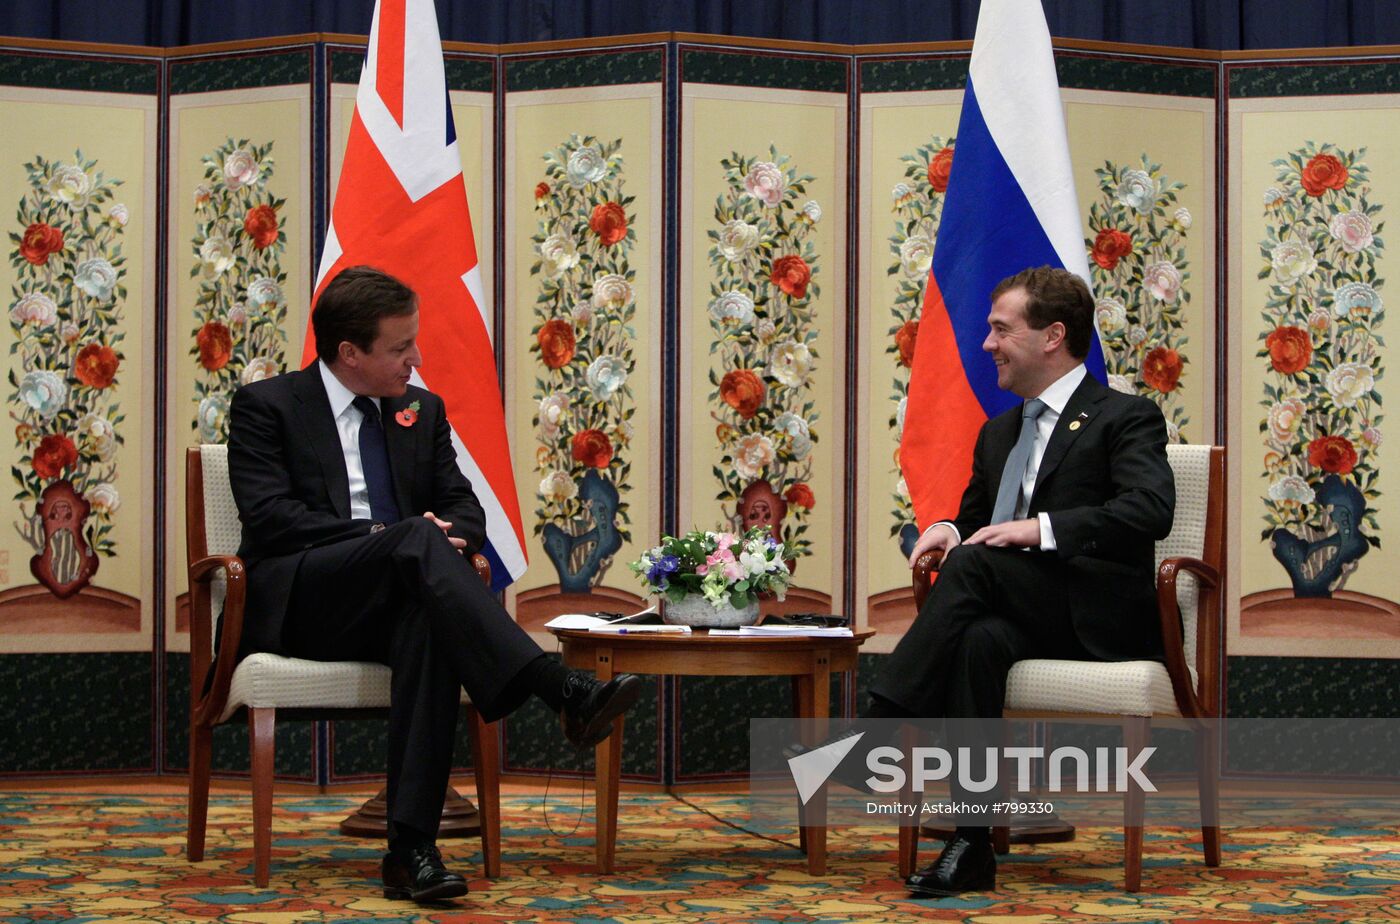 Dmitry Medvedev at G20 summit in Seoul